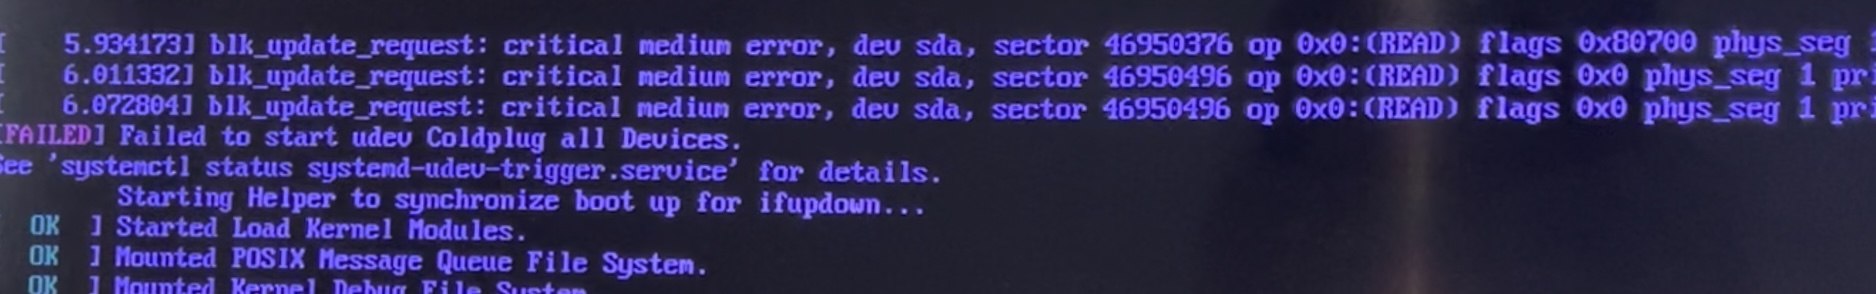 First set of boot errors saying: blk_update_request: critical medium error, dev sda, etc...